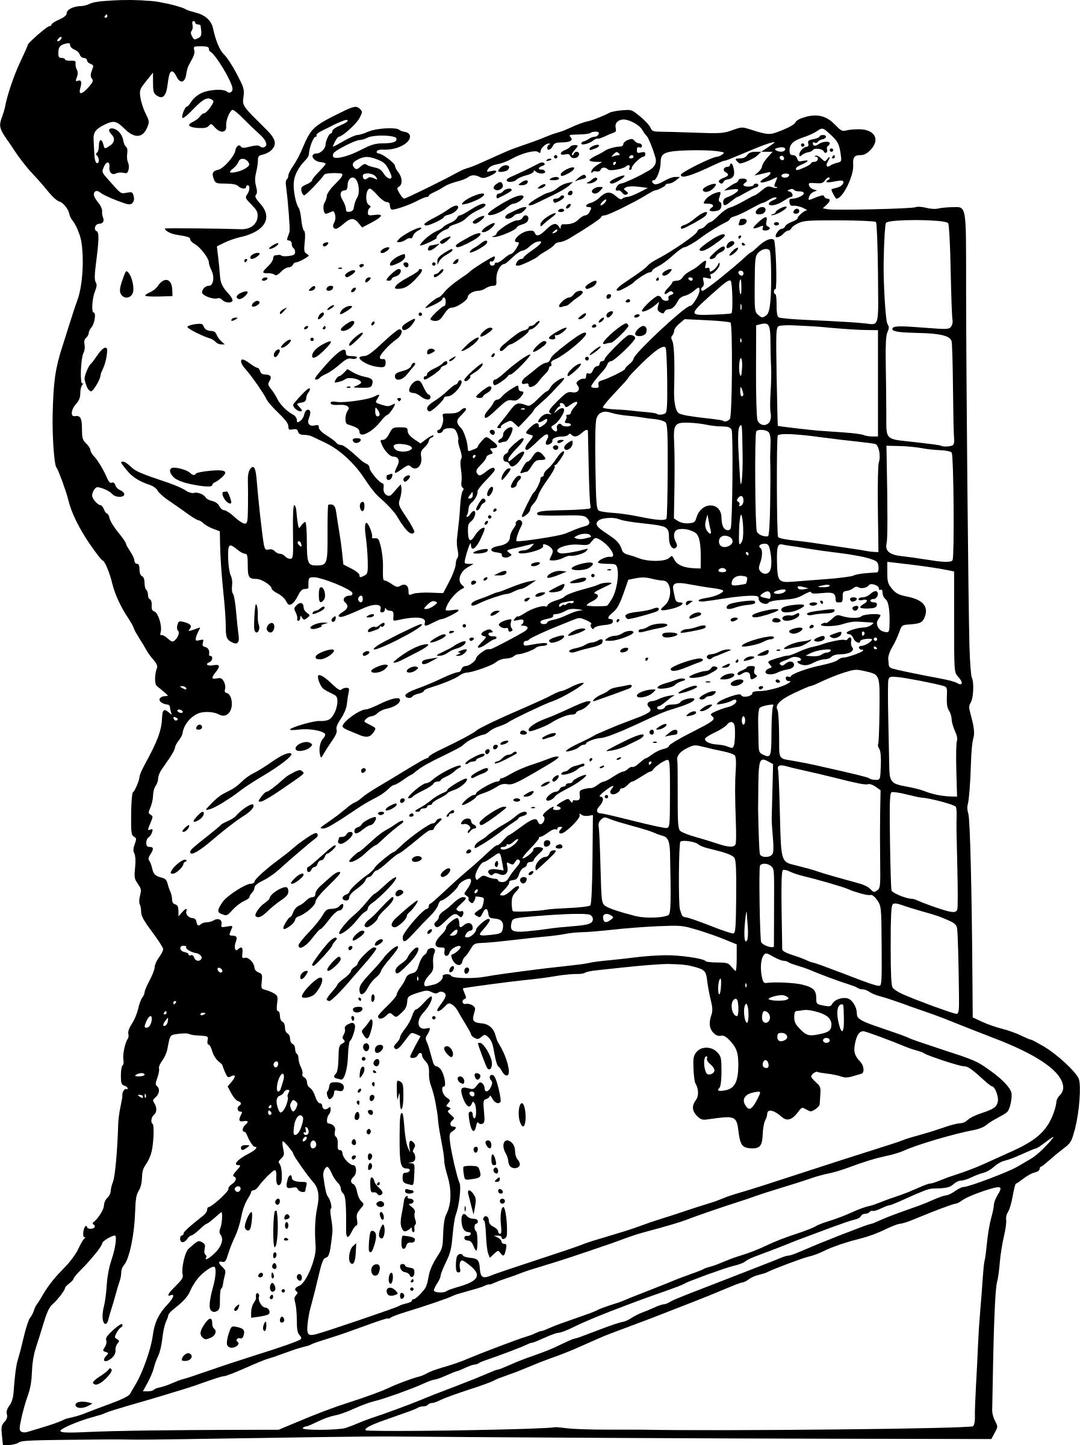 Man in Shower png transparent